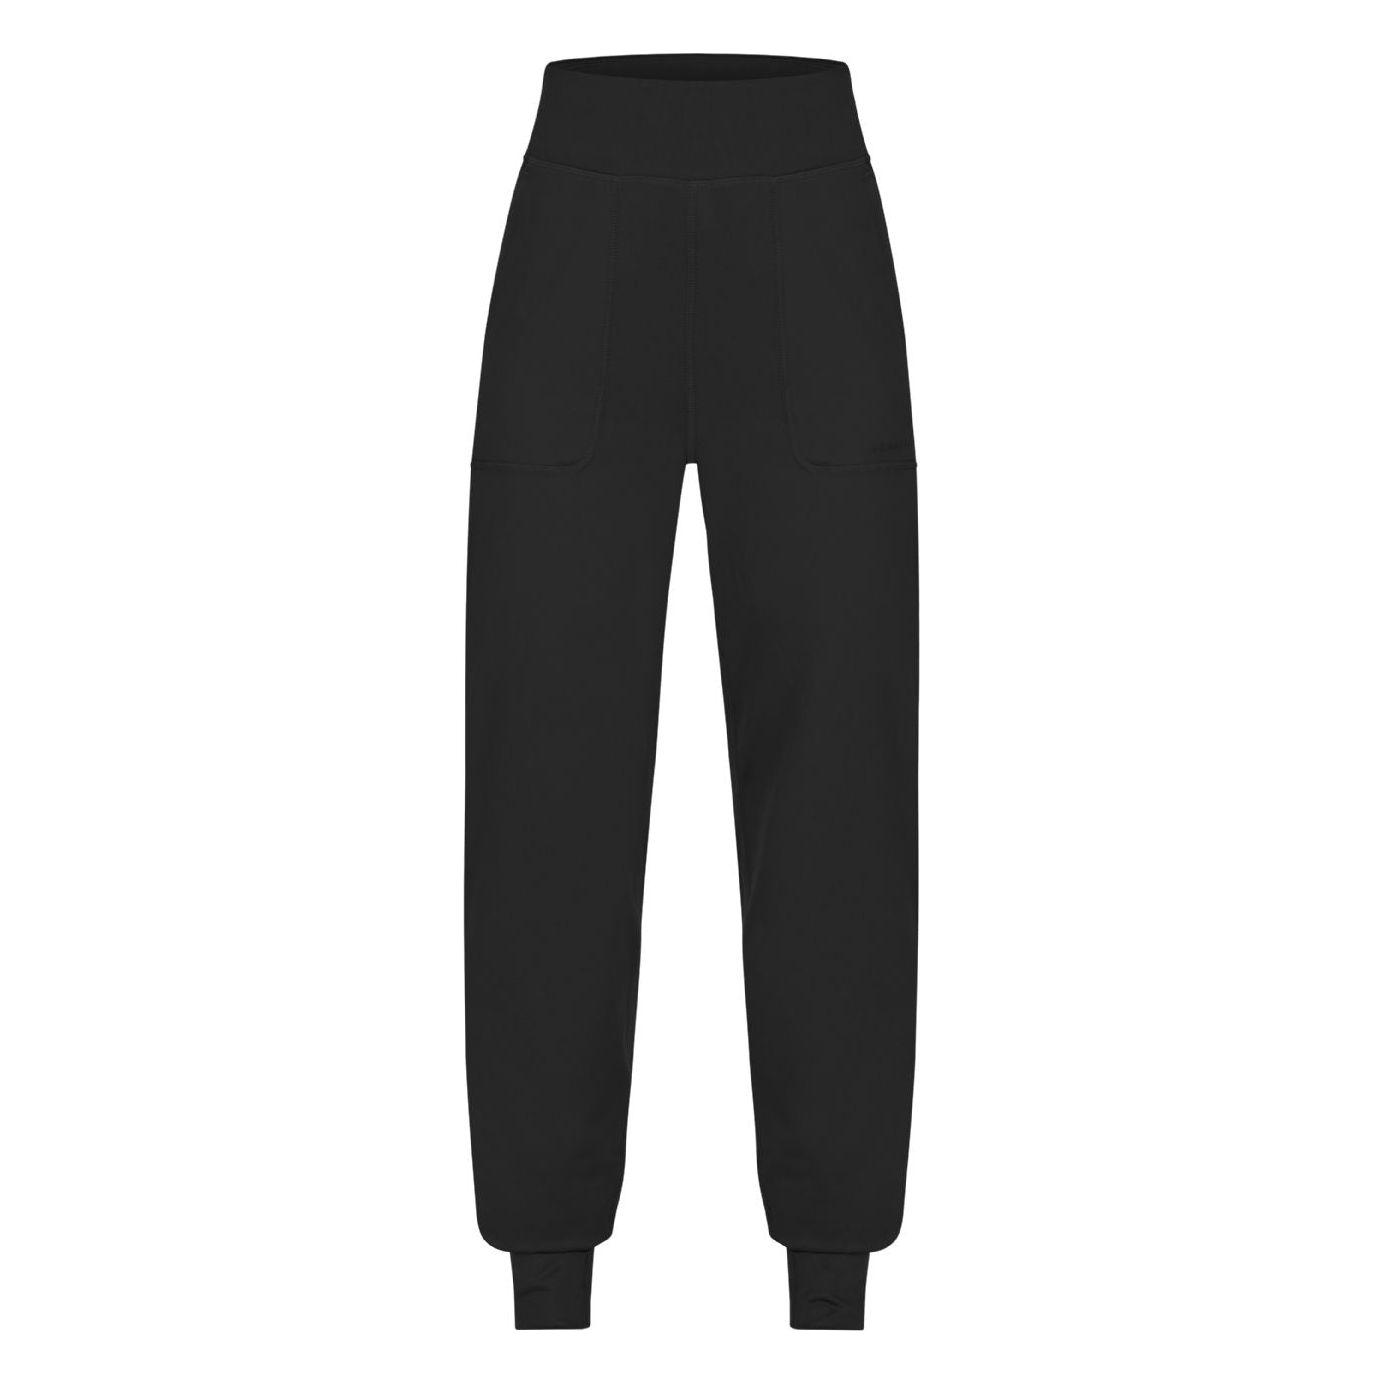 Rohnisch W Pants Soft Jersey Pants, Black